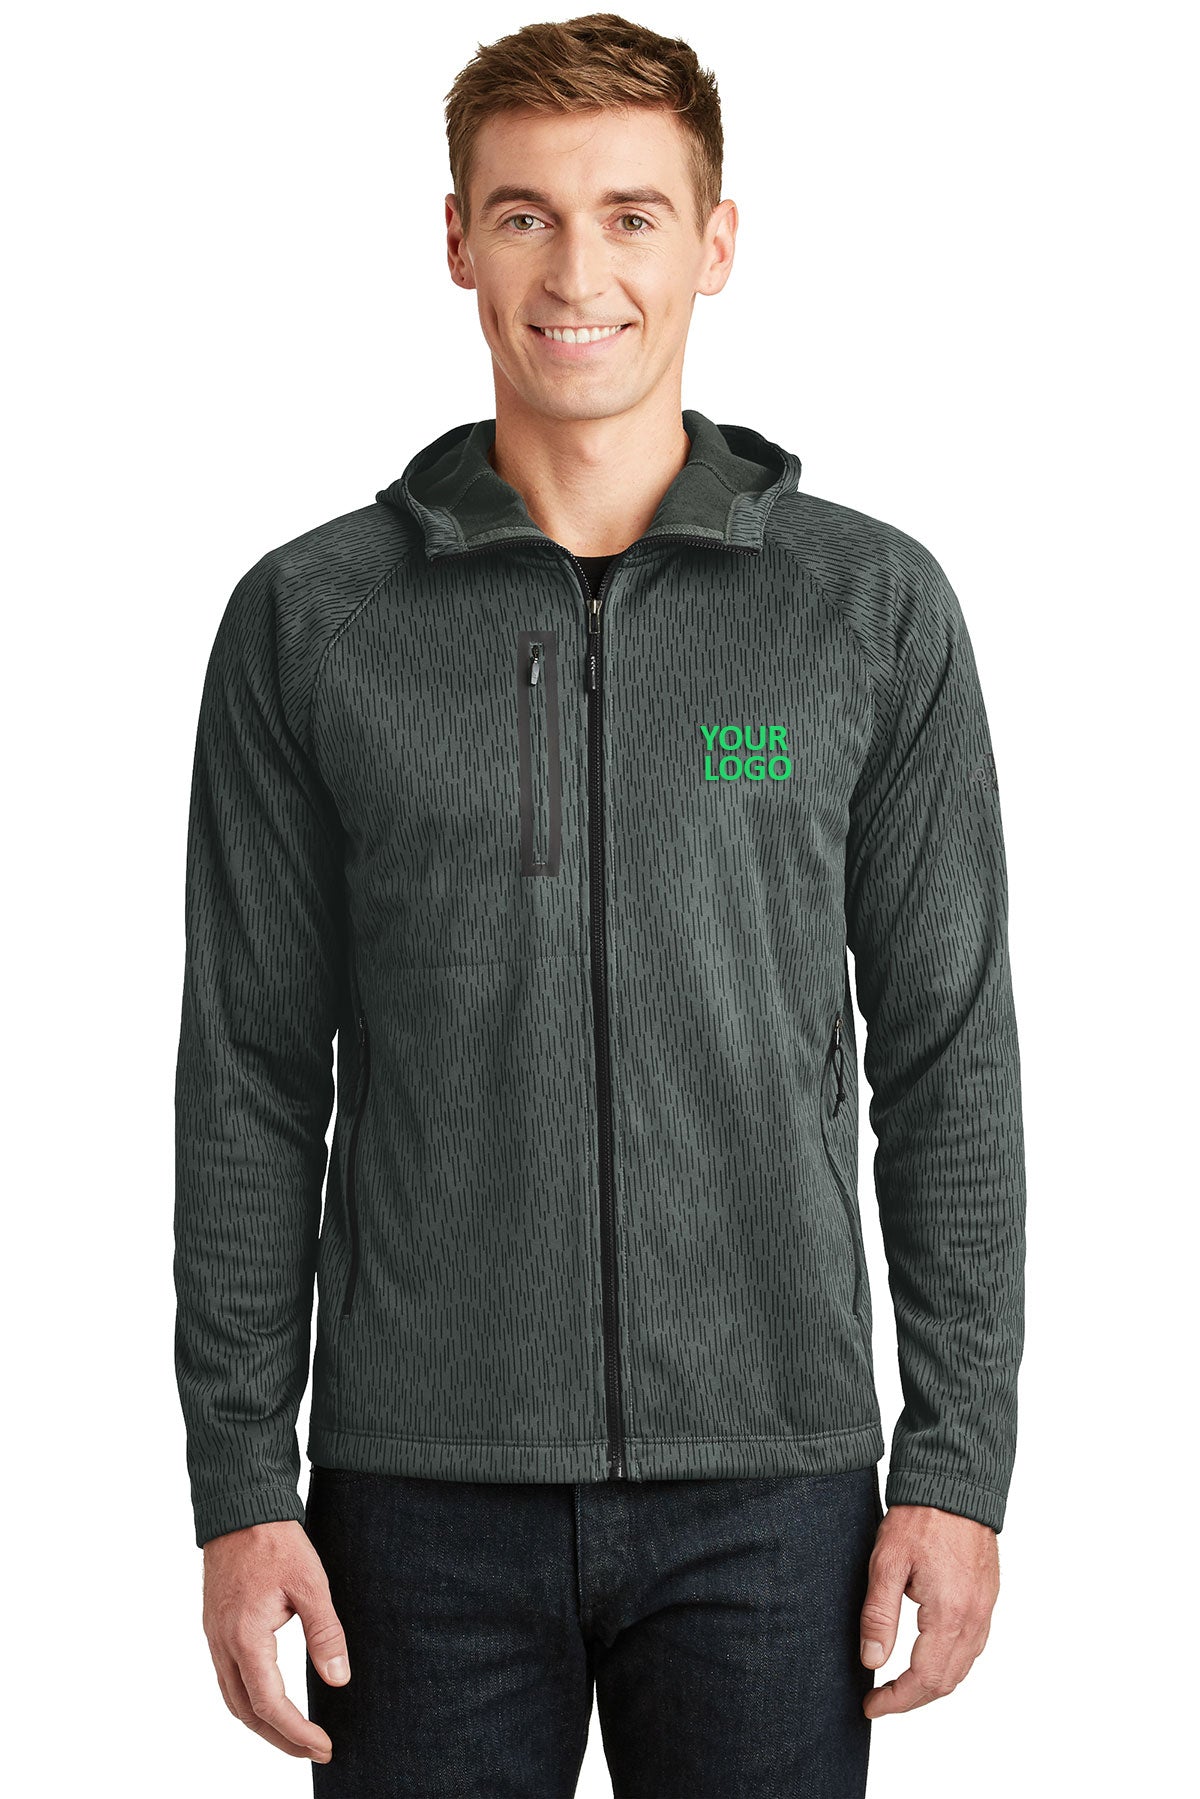 The North Face Asphalt Grey Reign Camo Print NF0A3LHH promotional jackets company logo